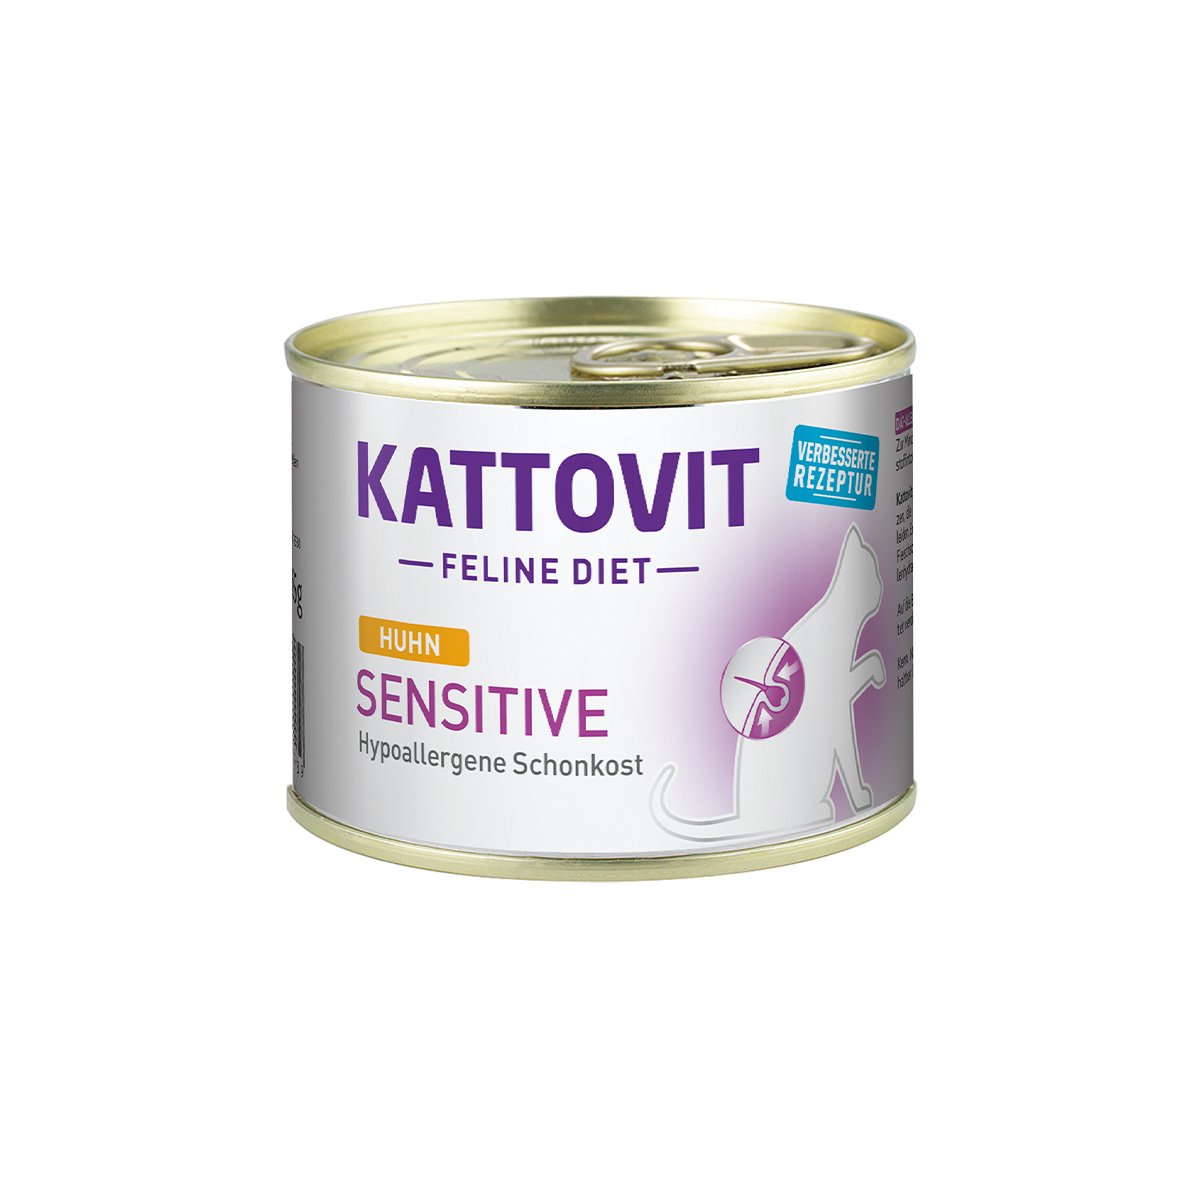 Kattovit Feline Diet Sensitive Huhn 12x185g von Kattovit